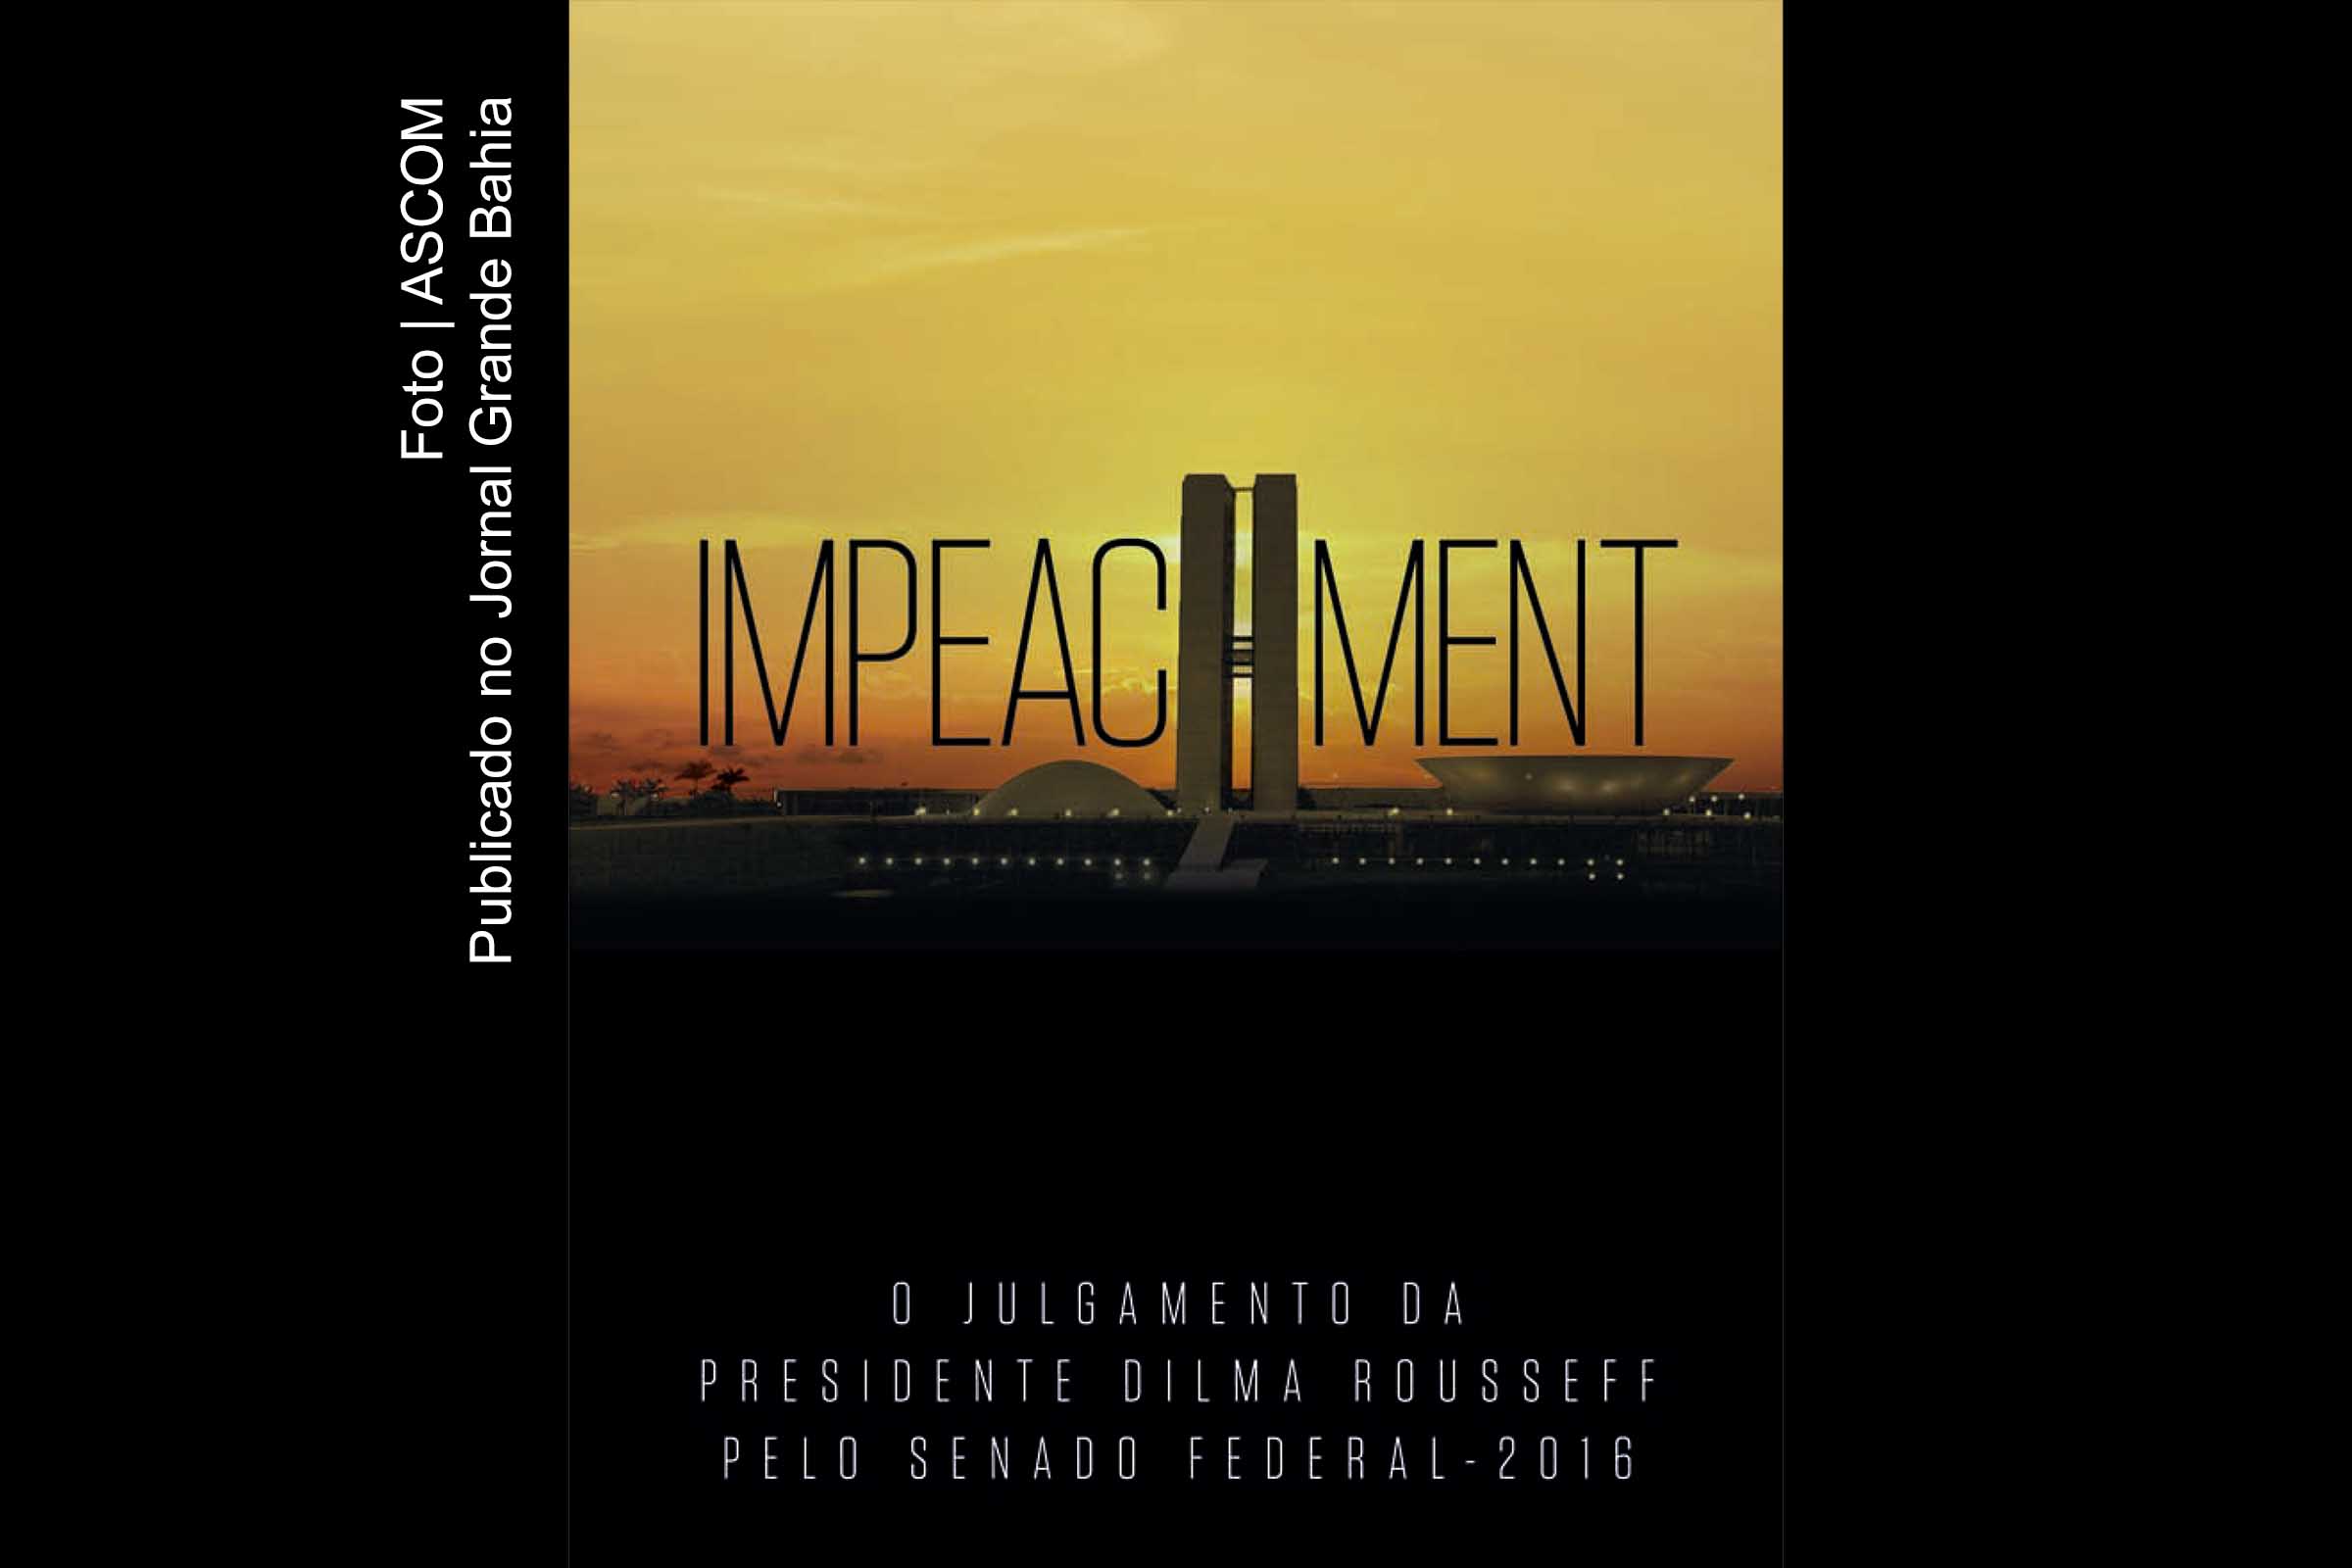 Capa do livro 'Impeachment – O julgamento da presidente Dilma Rousseff pelo Senado Federal'.